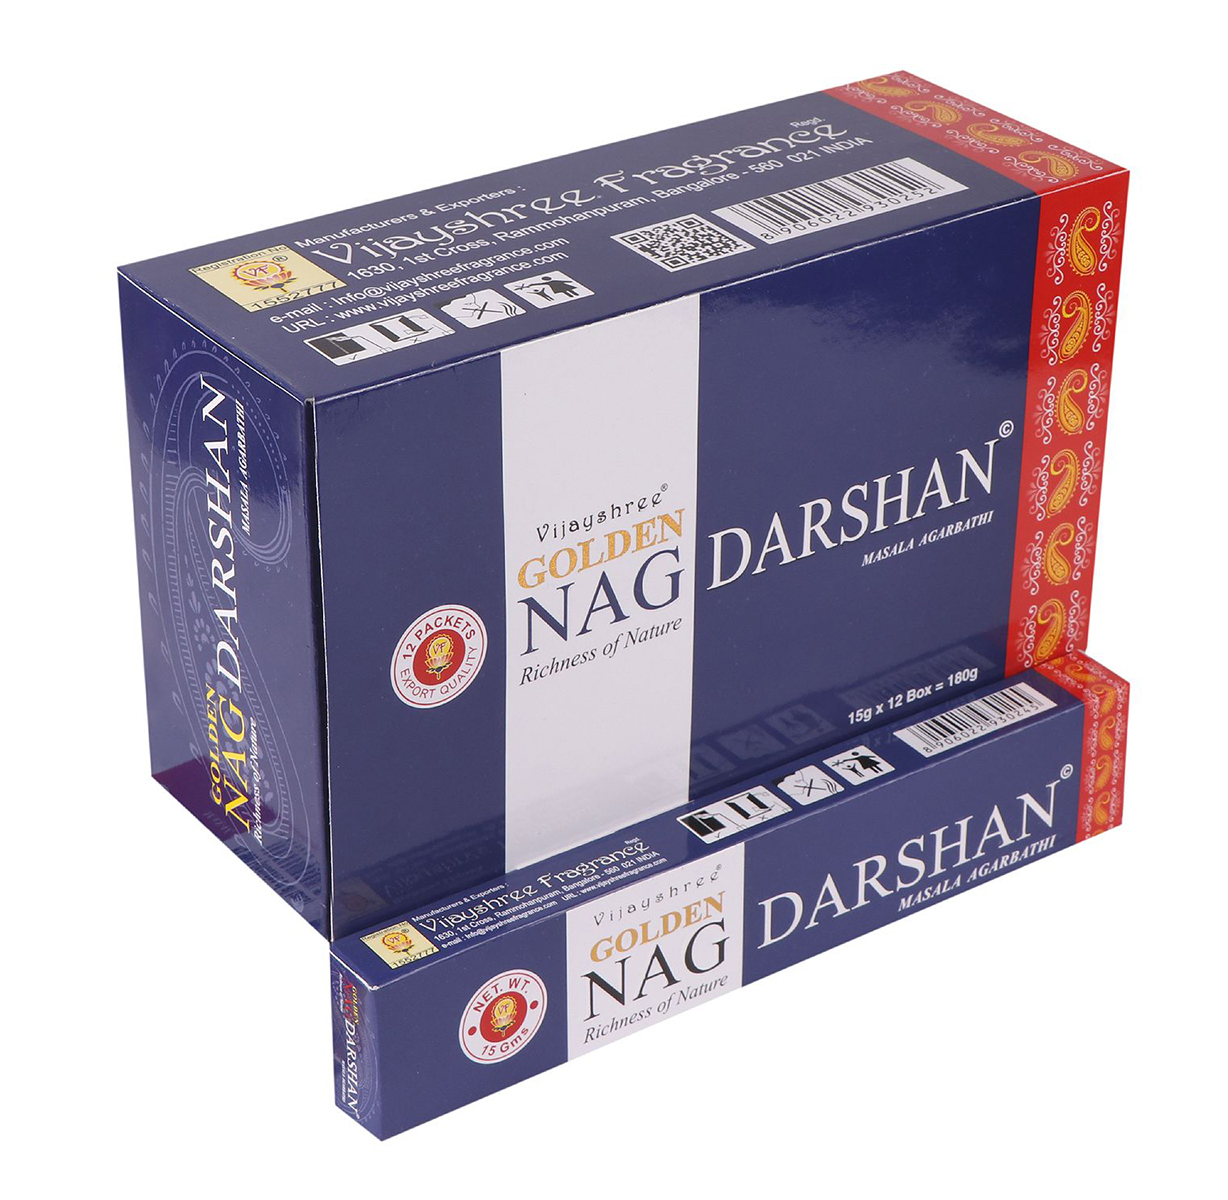 Golden Nag Darshan Vijayshree incense 15g